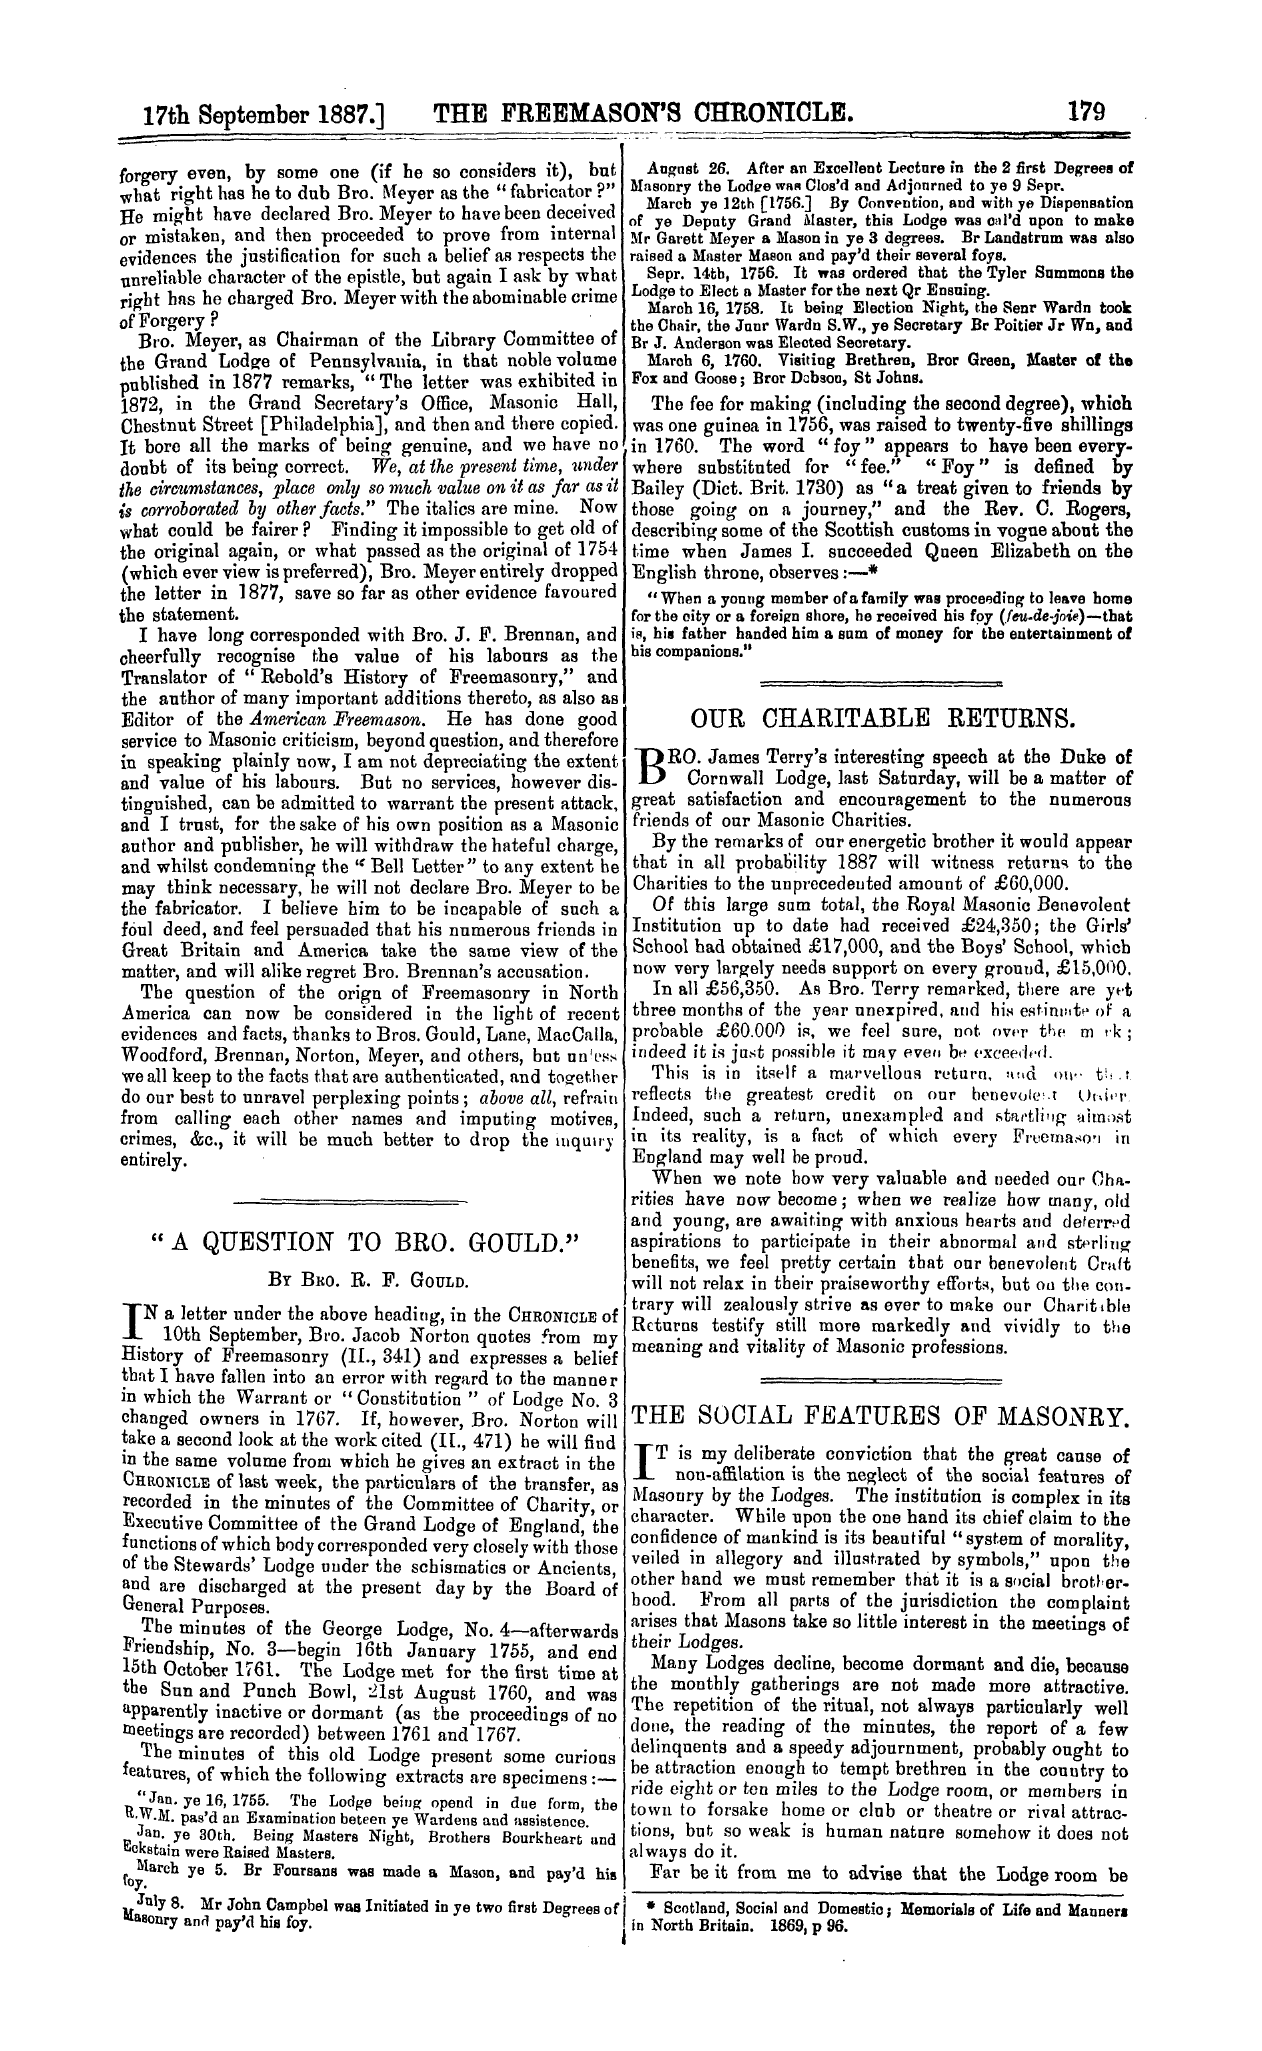 The Freemason's Chronicle: 1887-09-17 - Our Charitable Returns.